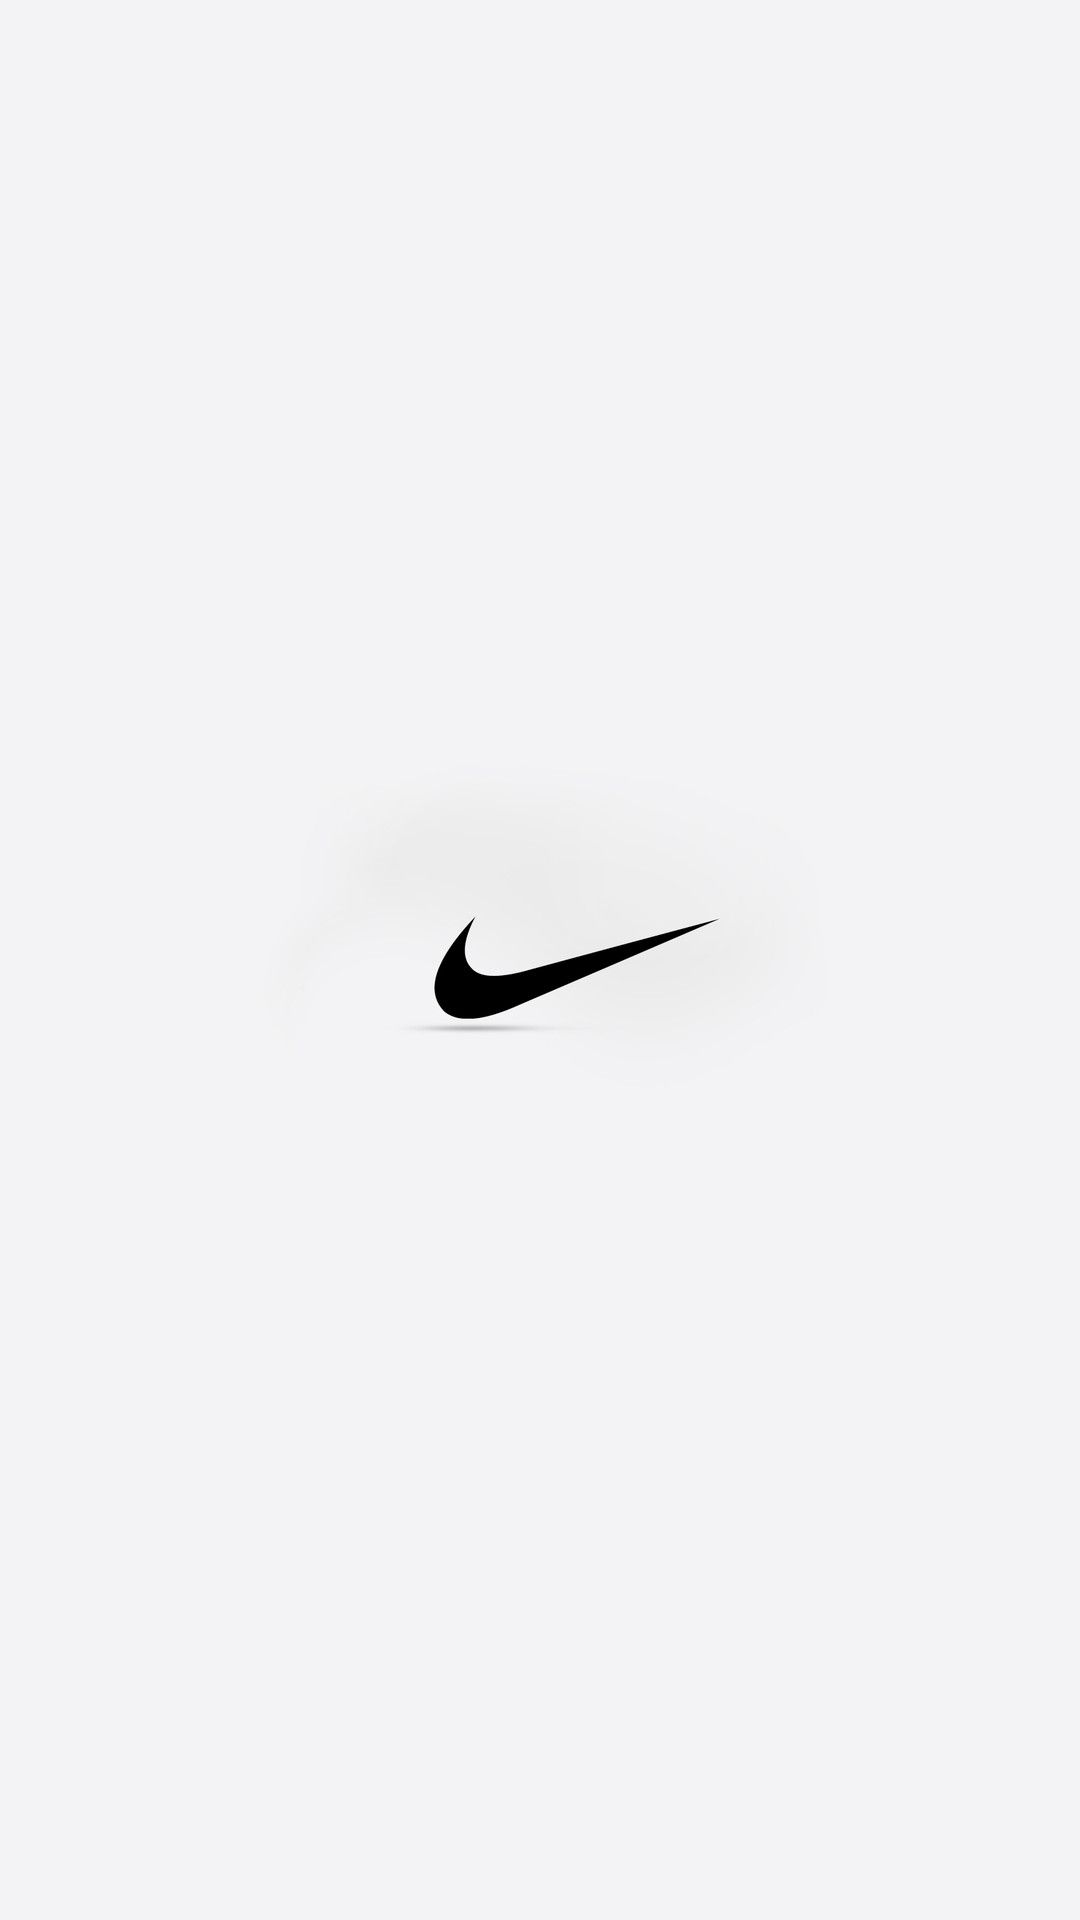 Simple Nike Wallpaper Free Simple Nike Background